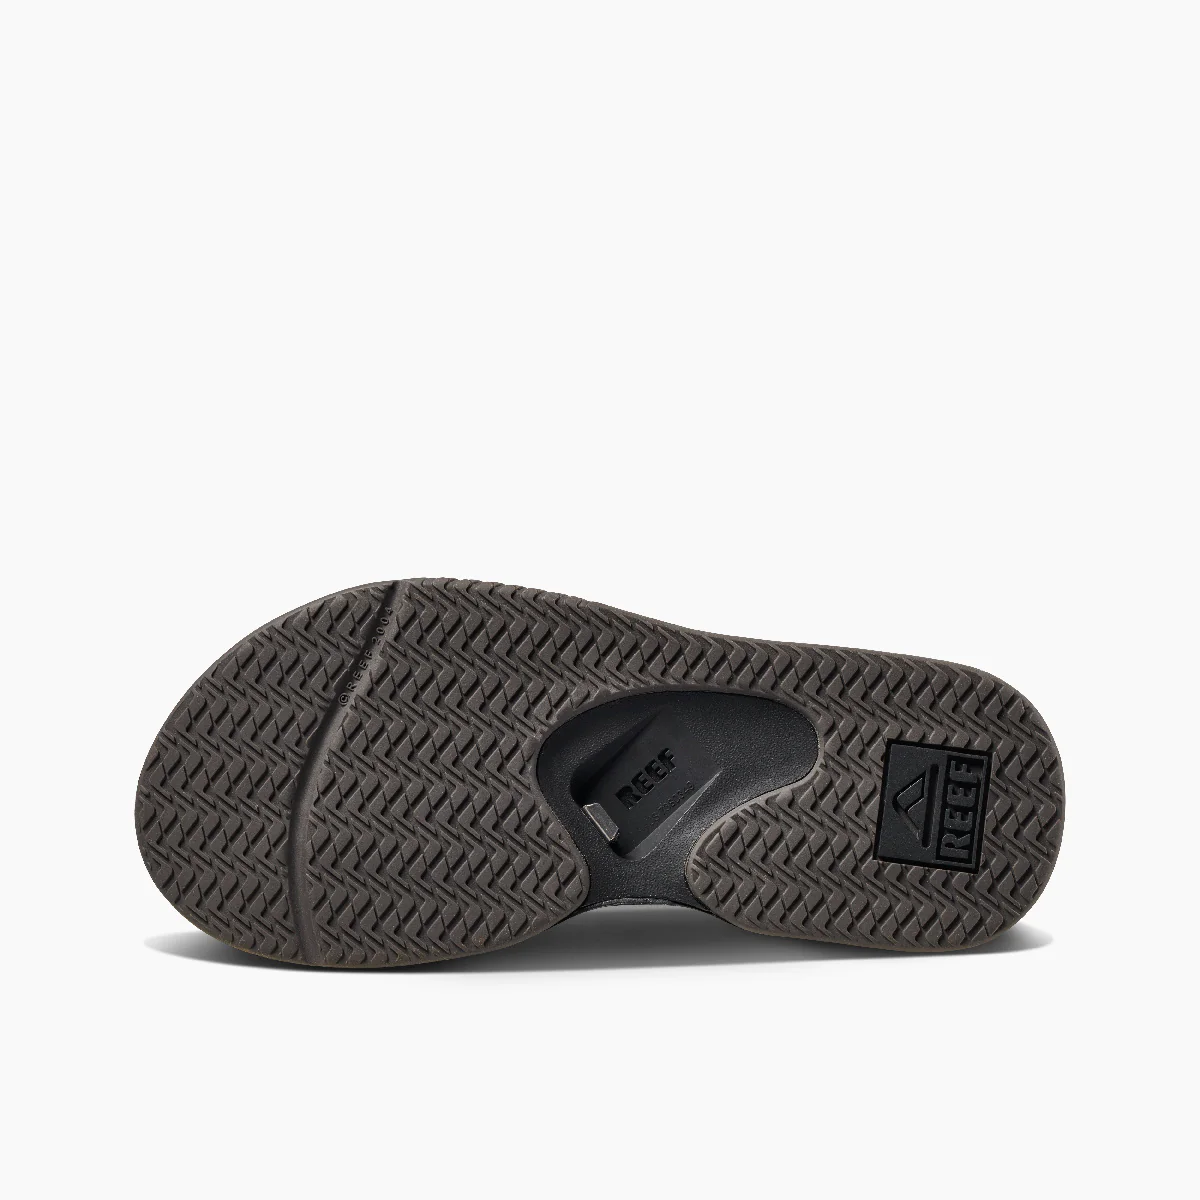 Womens Fanning flip flop sandals in black grey bottom view with bottle opener